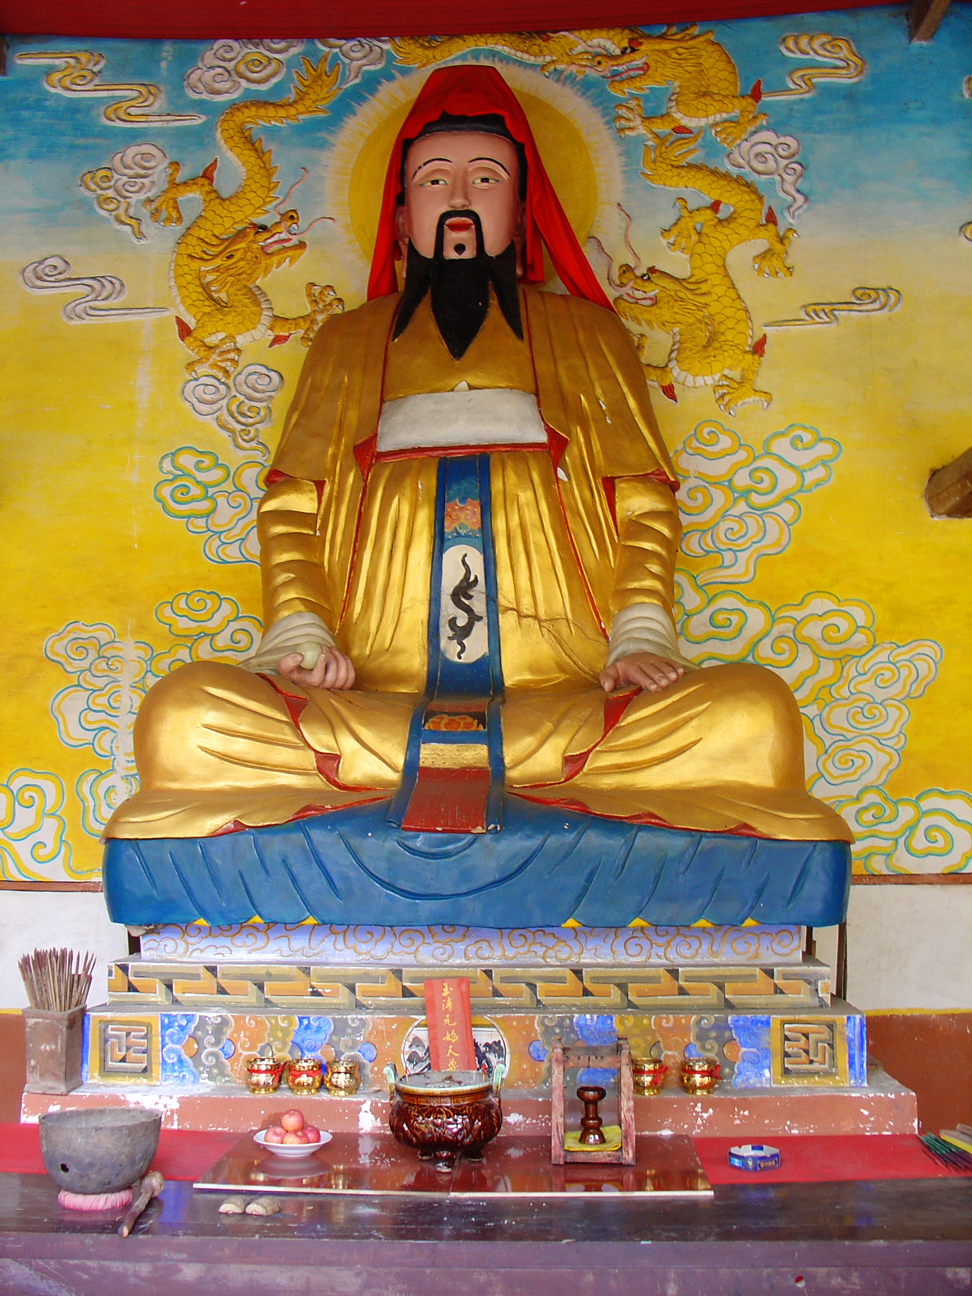 A buddha statue in the local temple